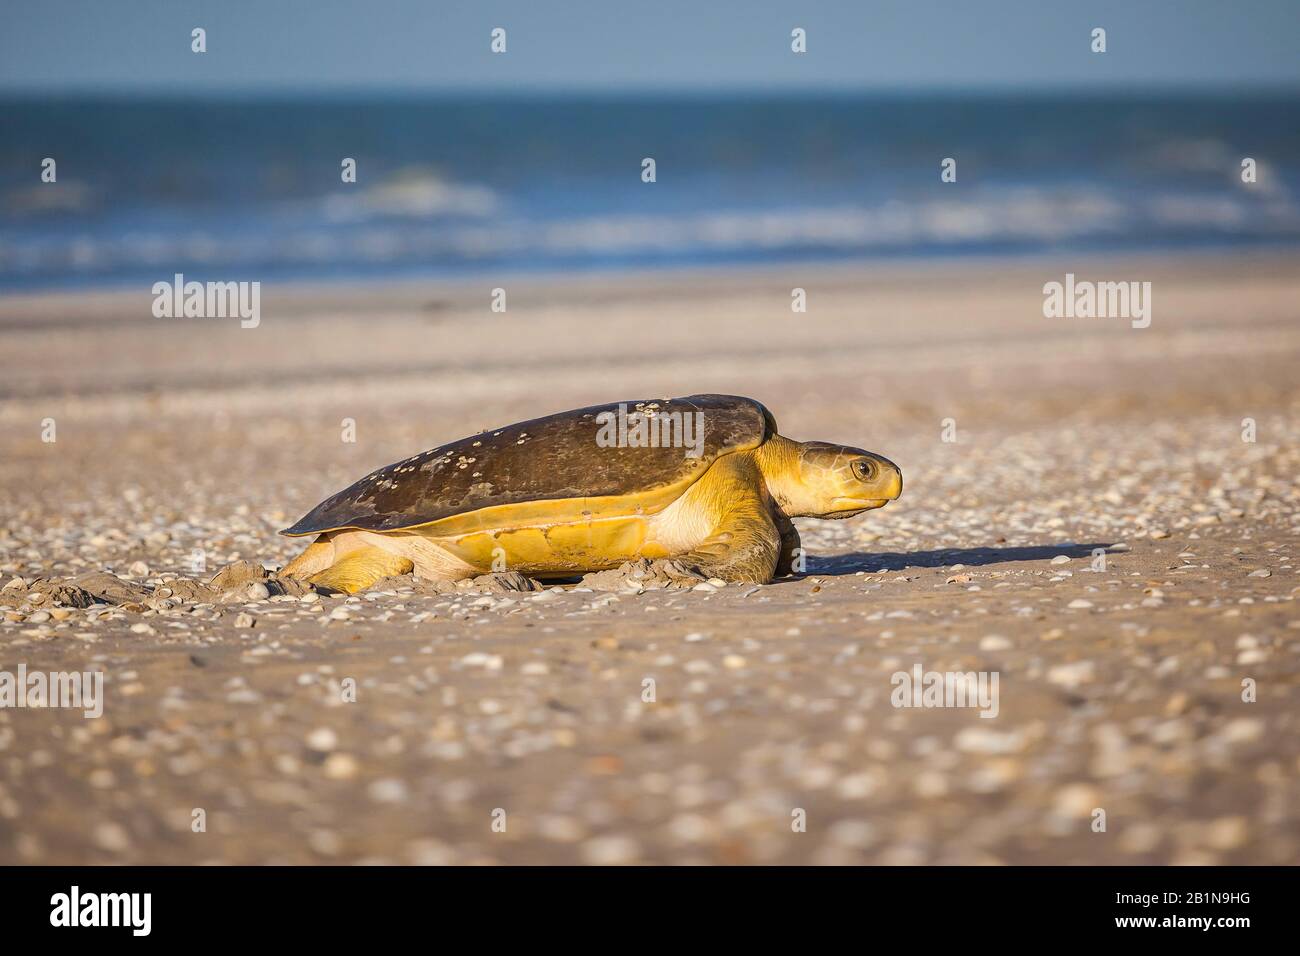 Tartaruga flatback mare, tartaruga flatback, tartaruga verde australiana (Natator depresssus, Chelonia depressa), a 80 Miglia Spiaggia, Australia Foto Stock